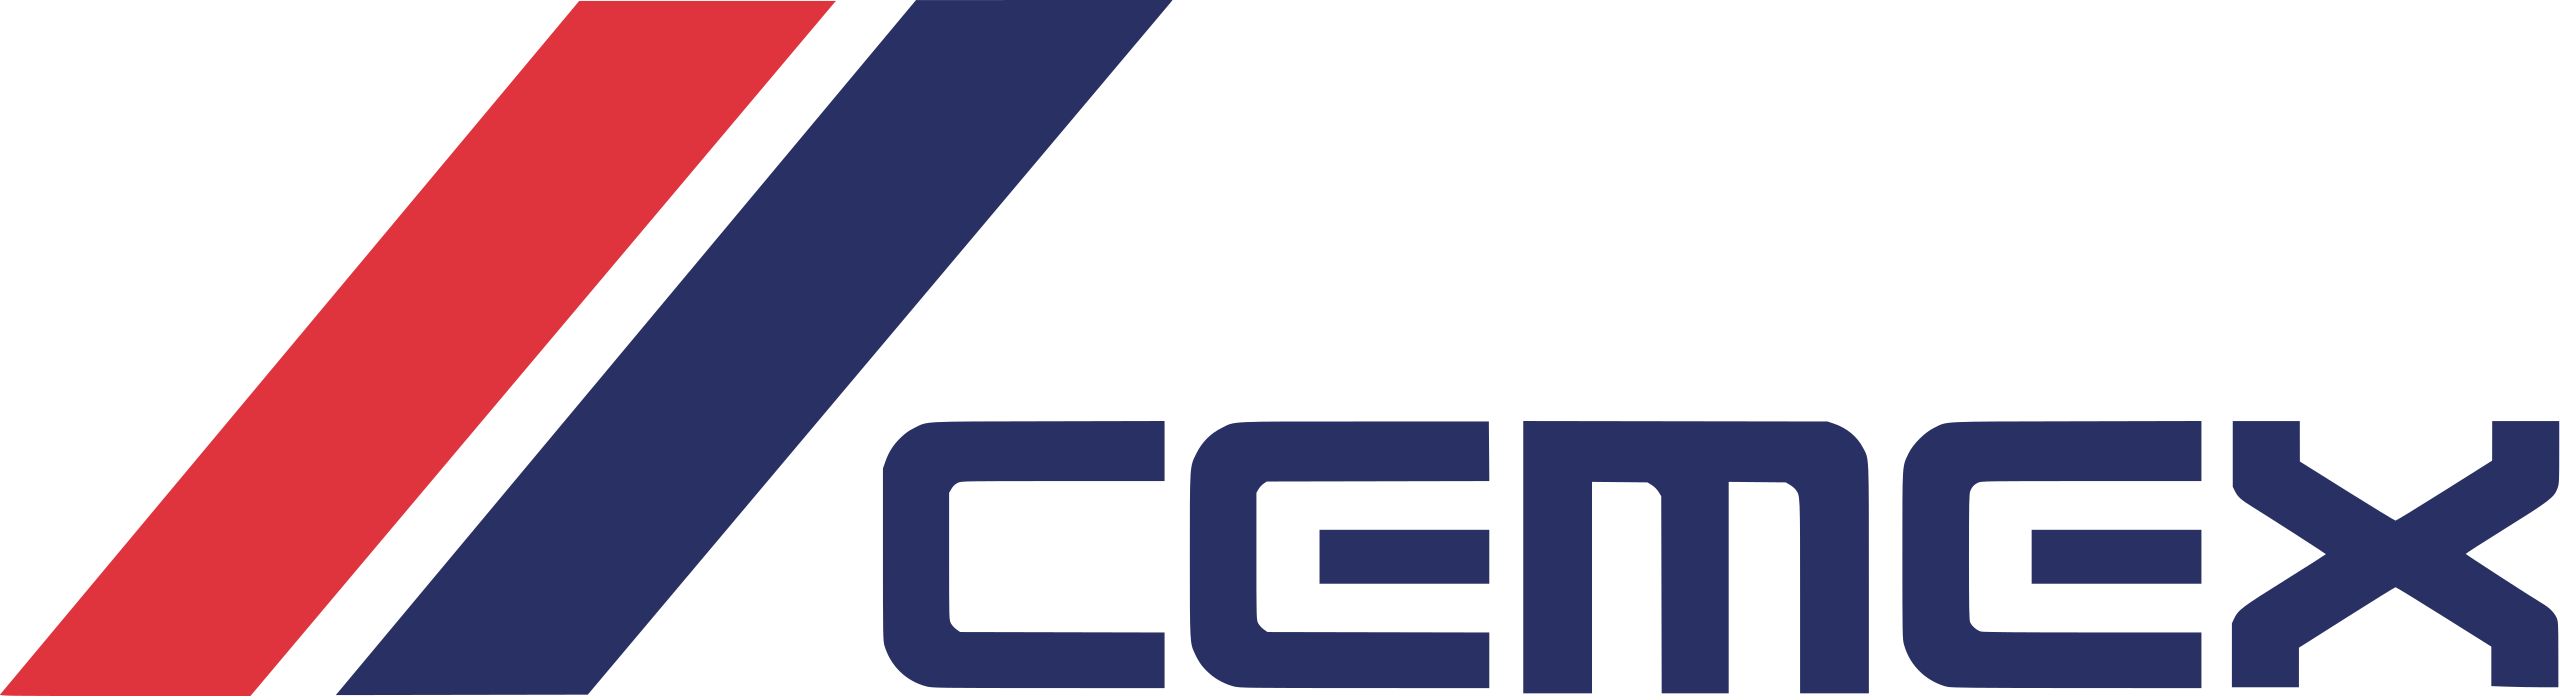 Logo_CEMEX.png